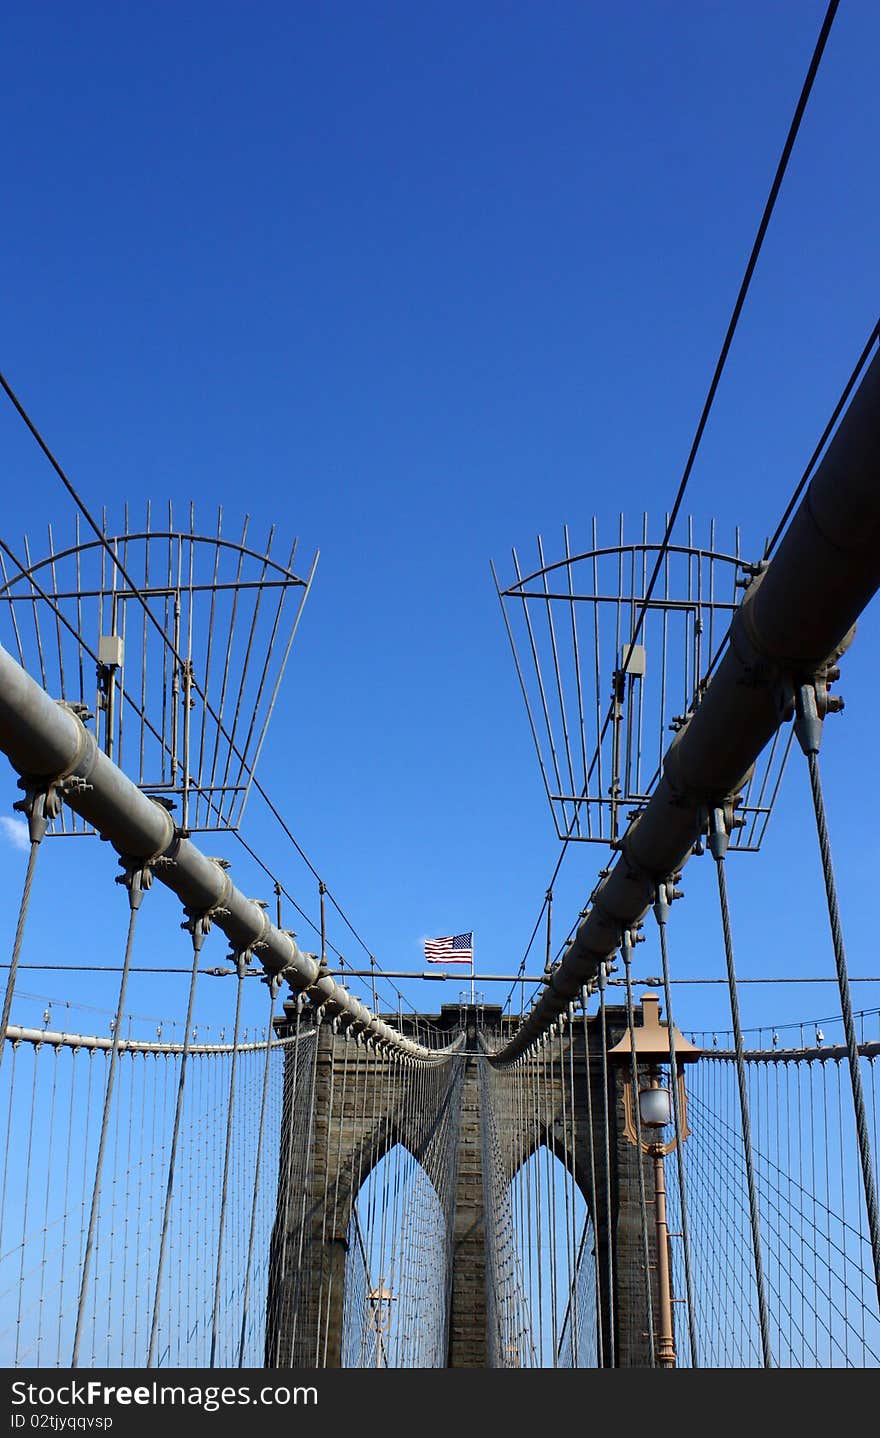 Brooklyn Bridge in New York City under a blue sky